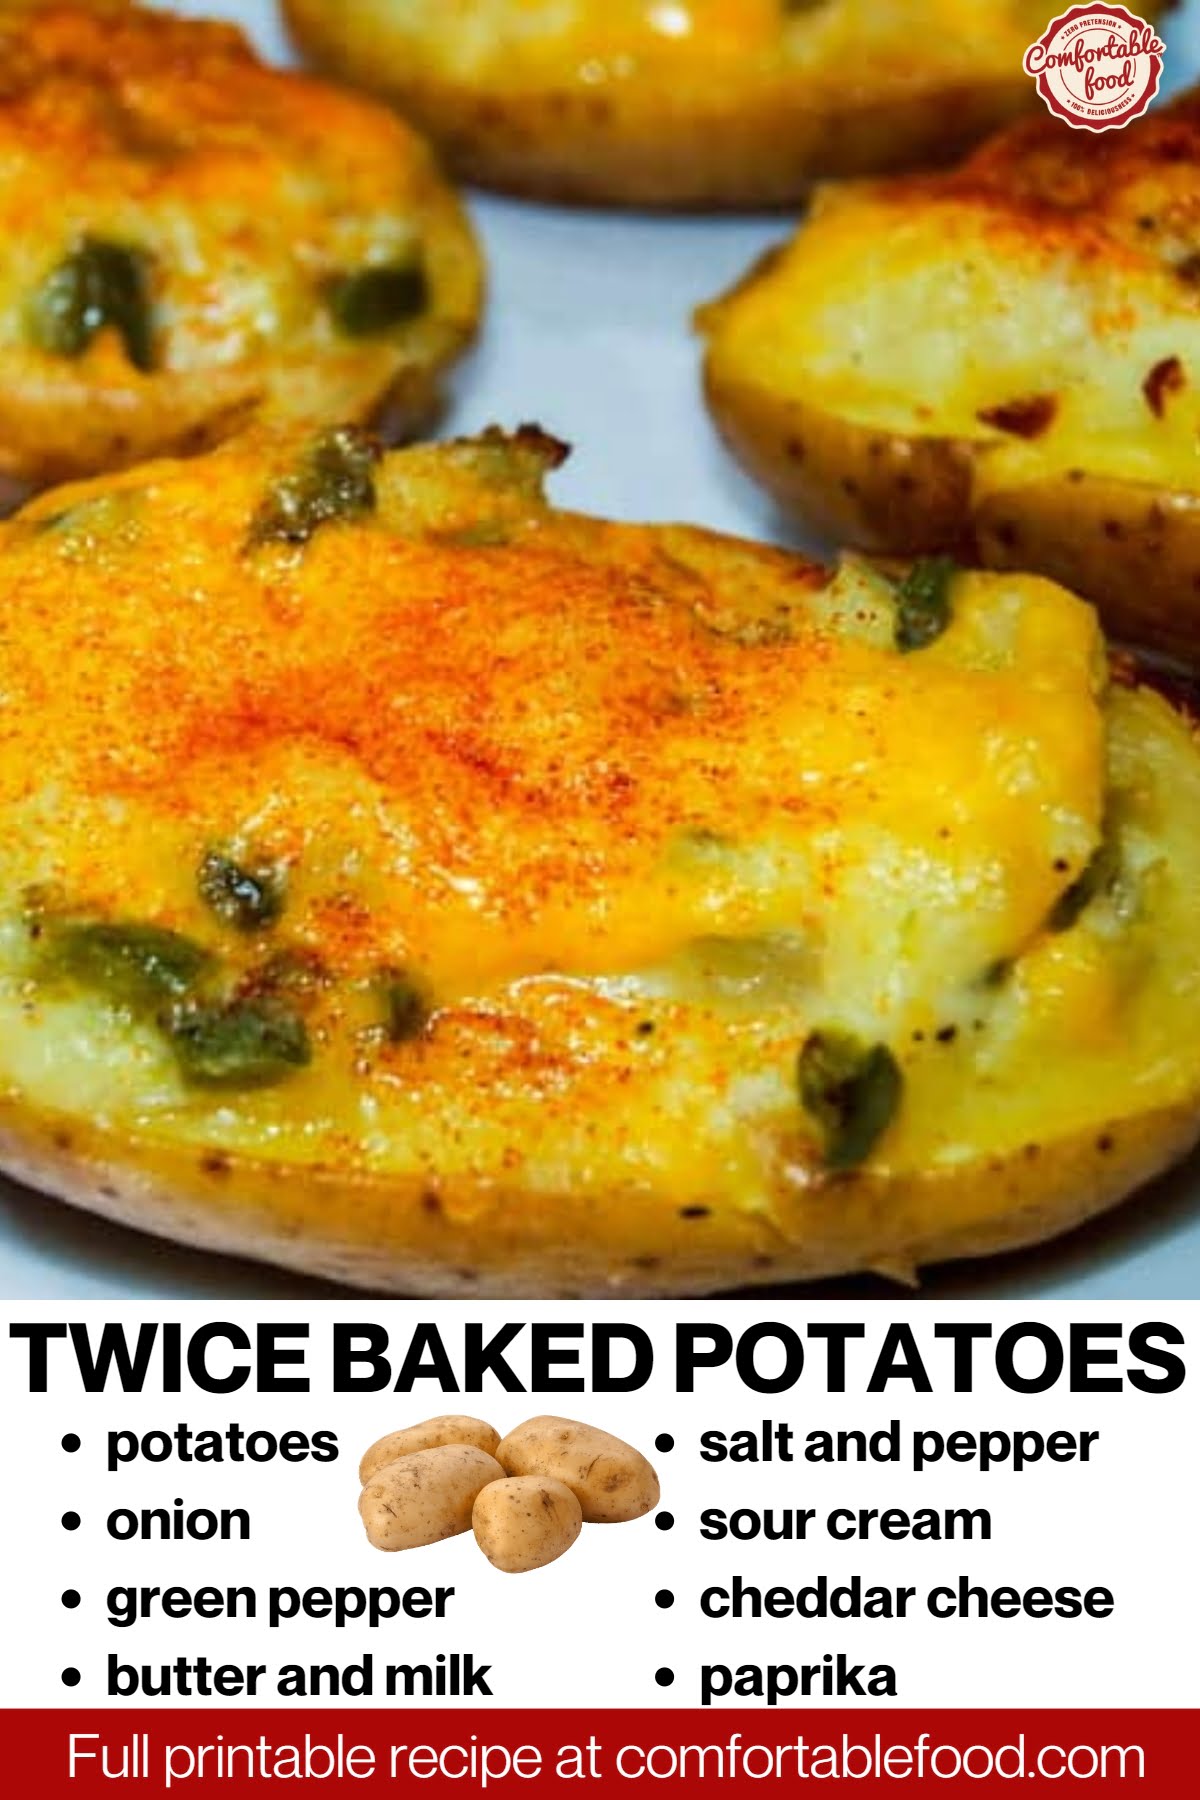 Twice baked potatoes socials